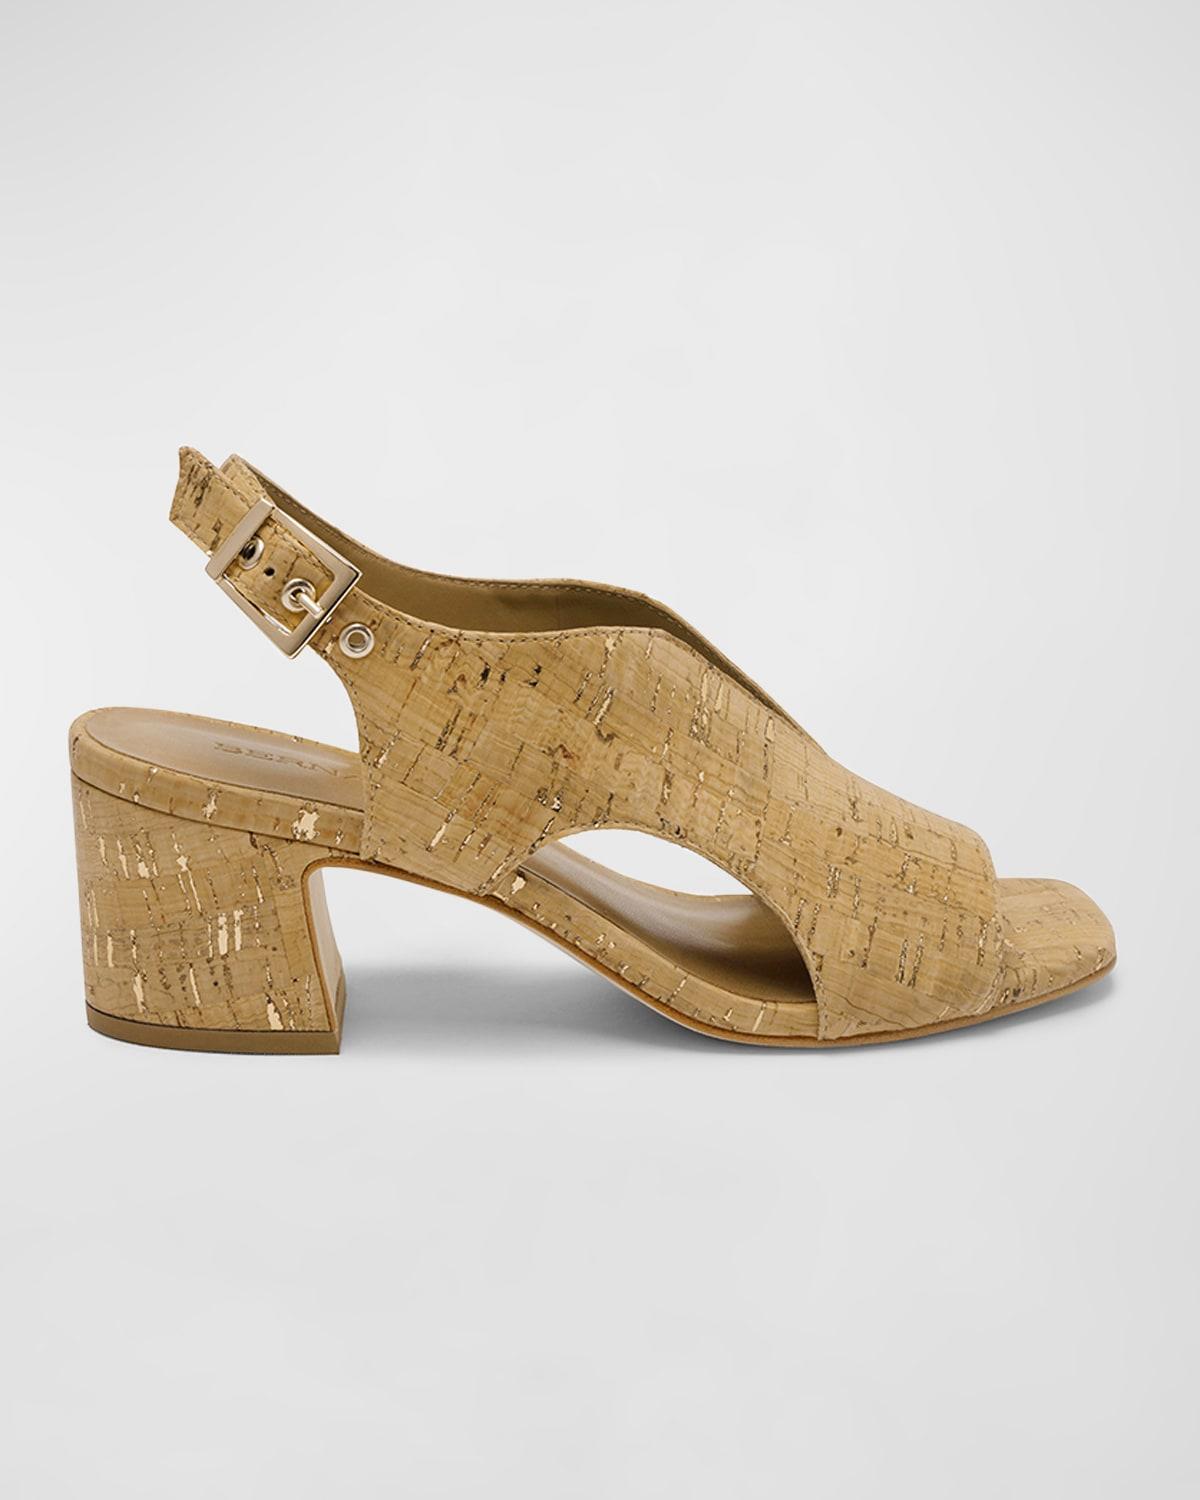 Bedford Mid Heel Sandals Product Image